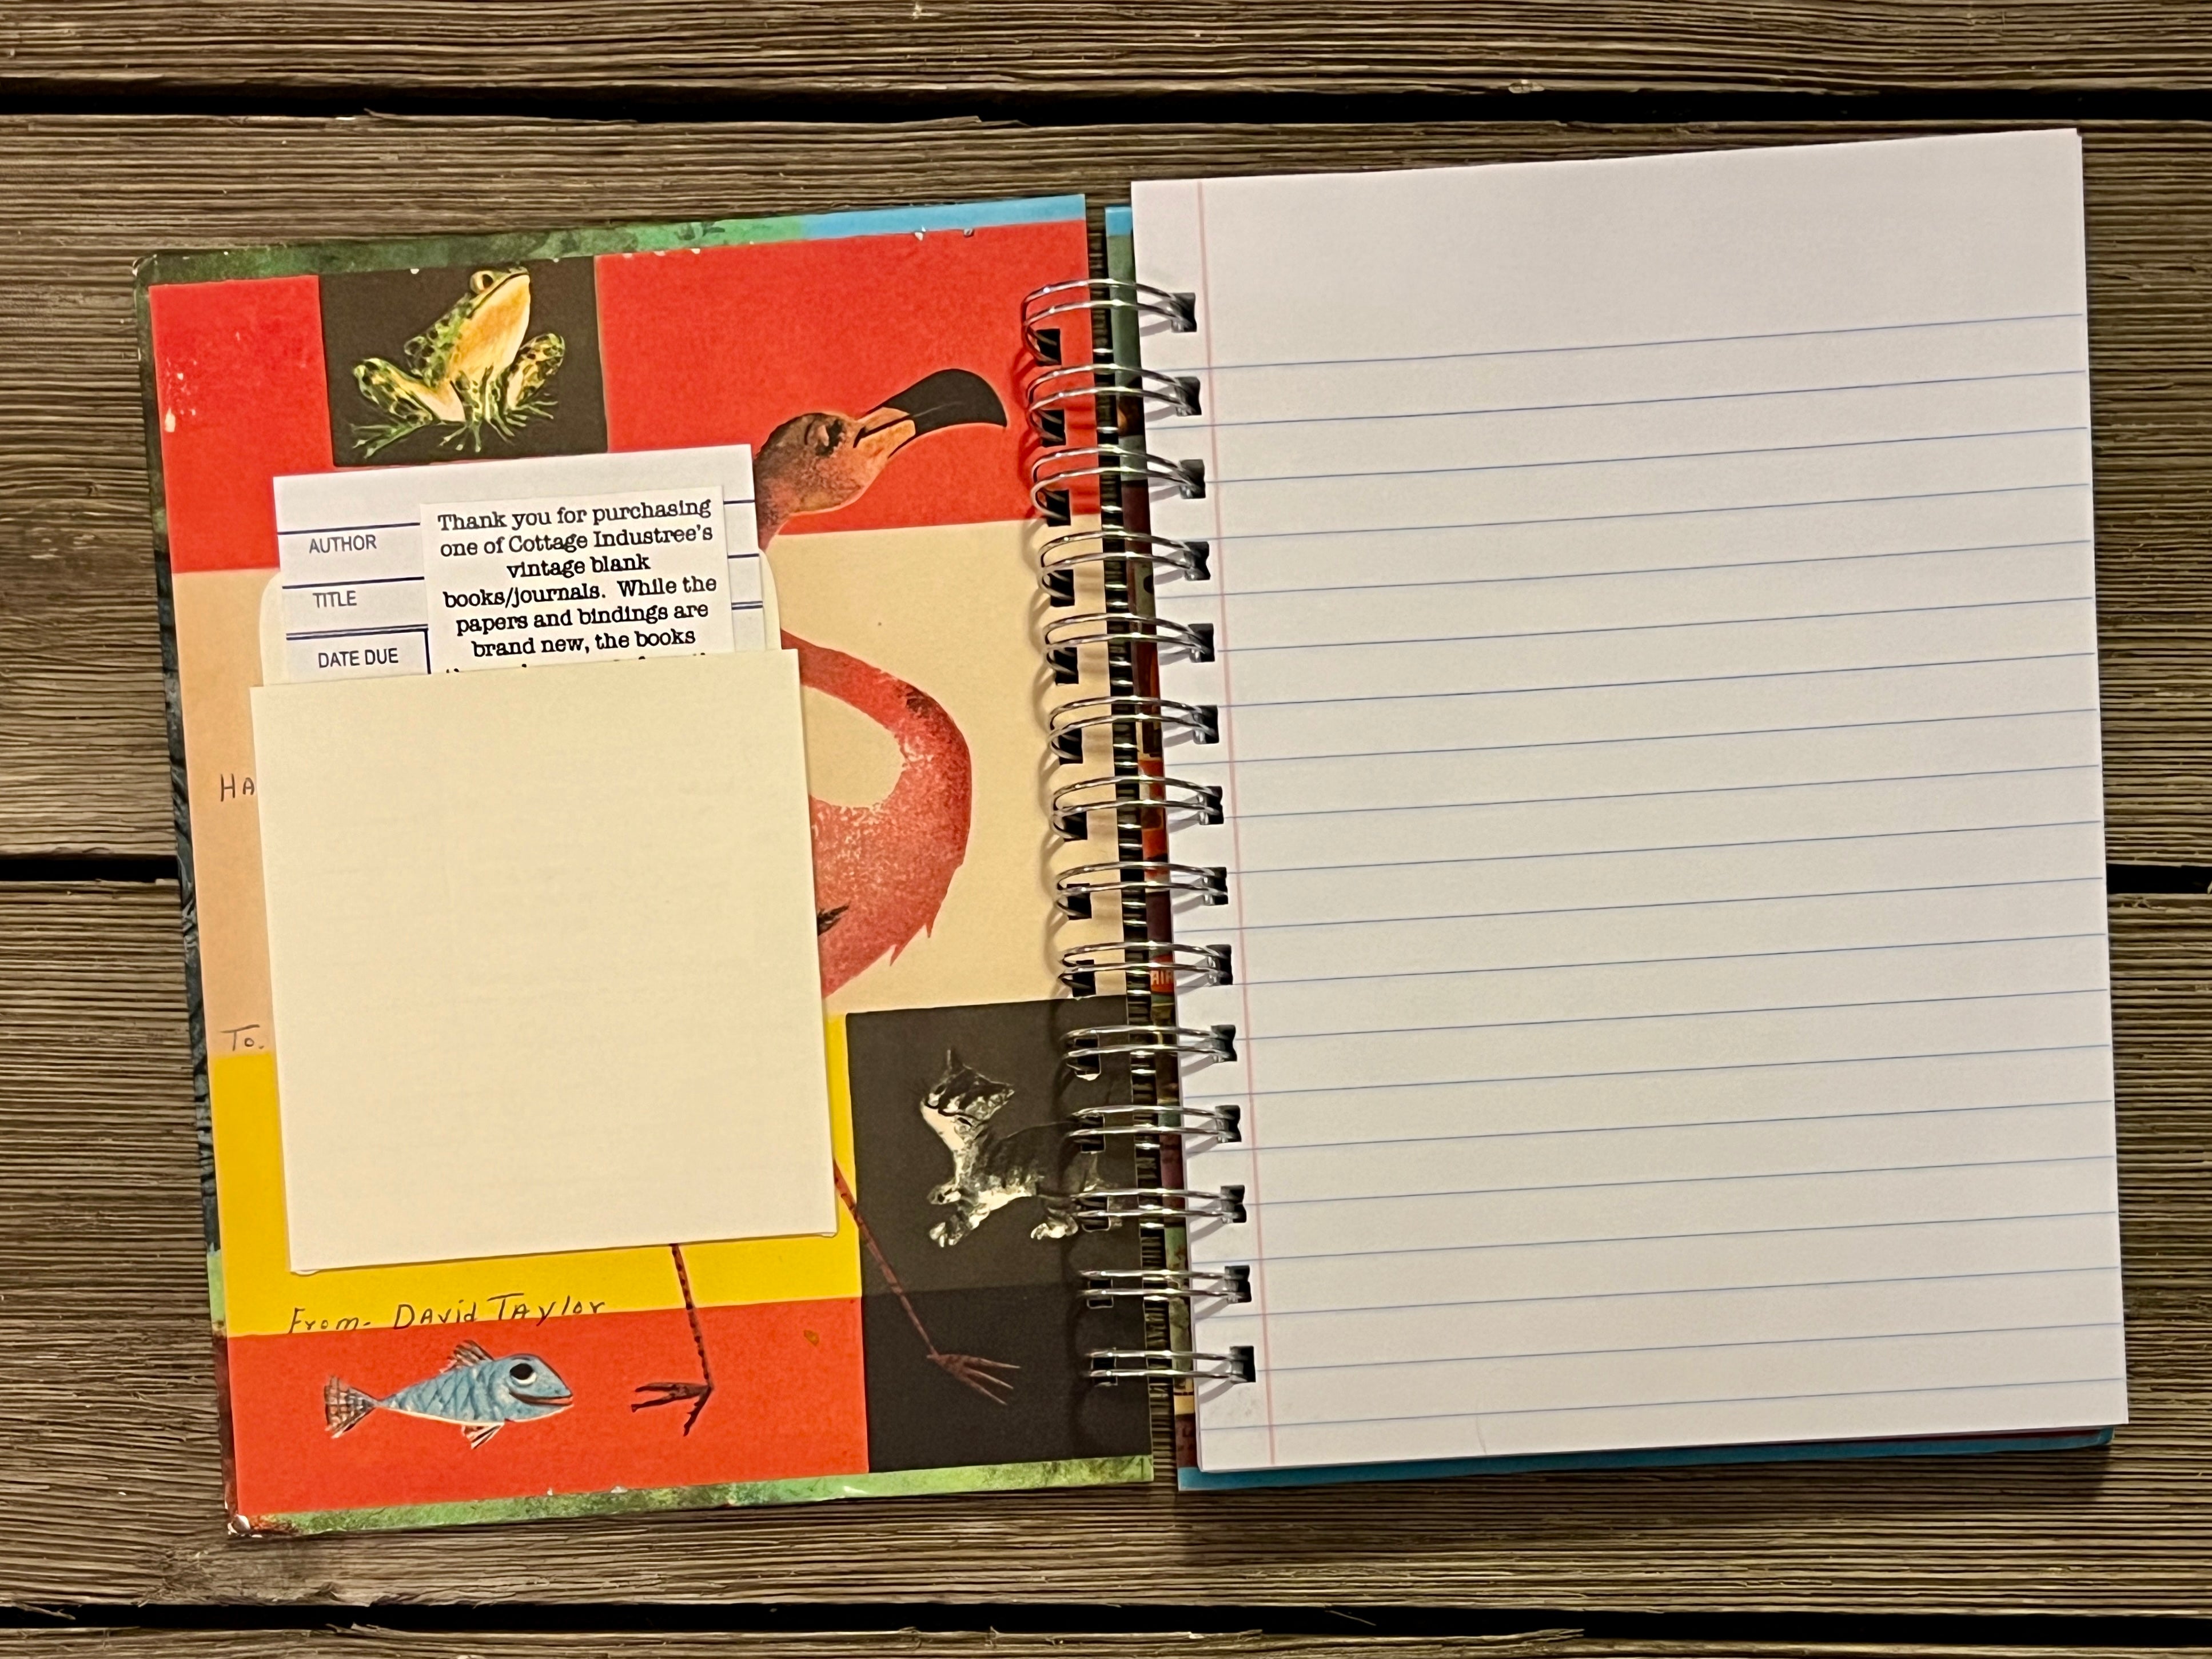 My First Journal-Blank Book